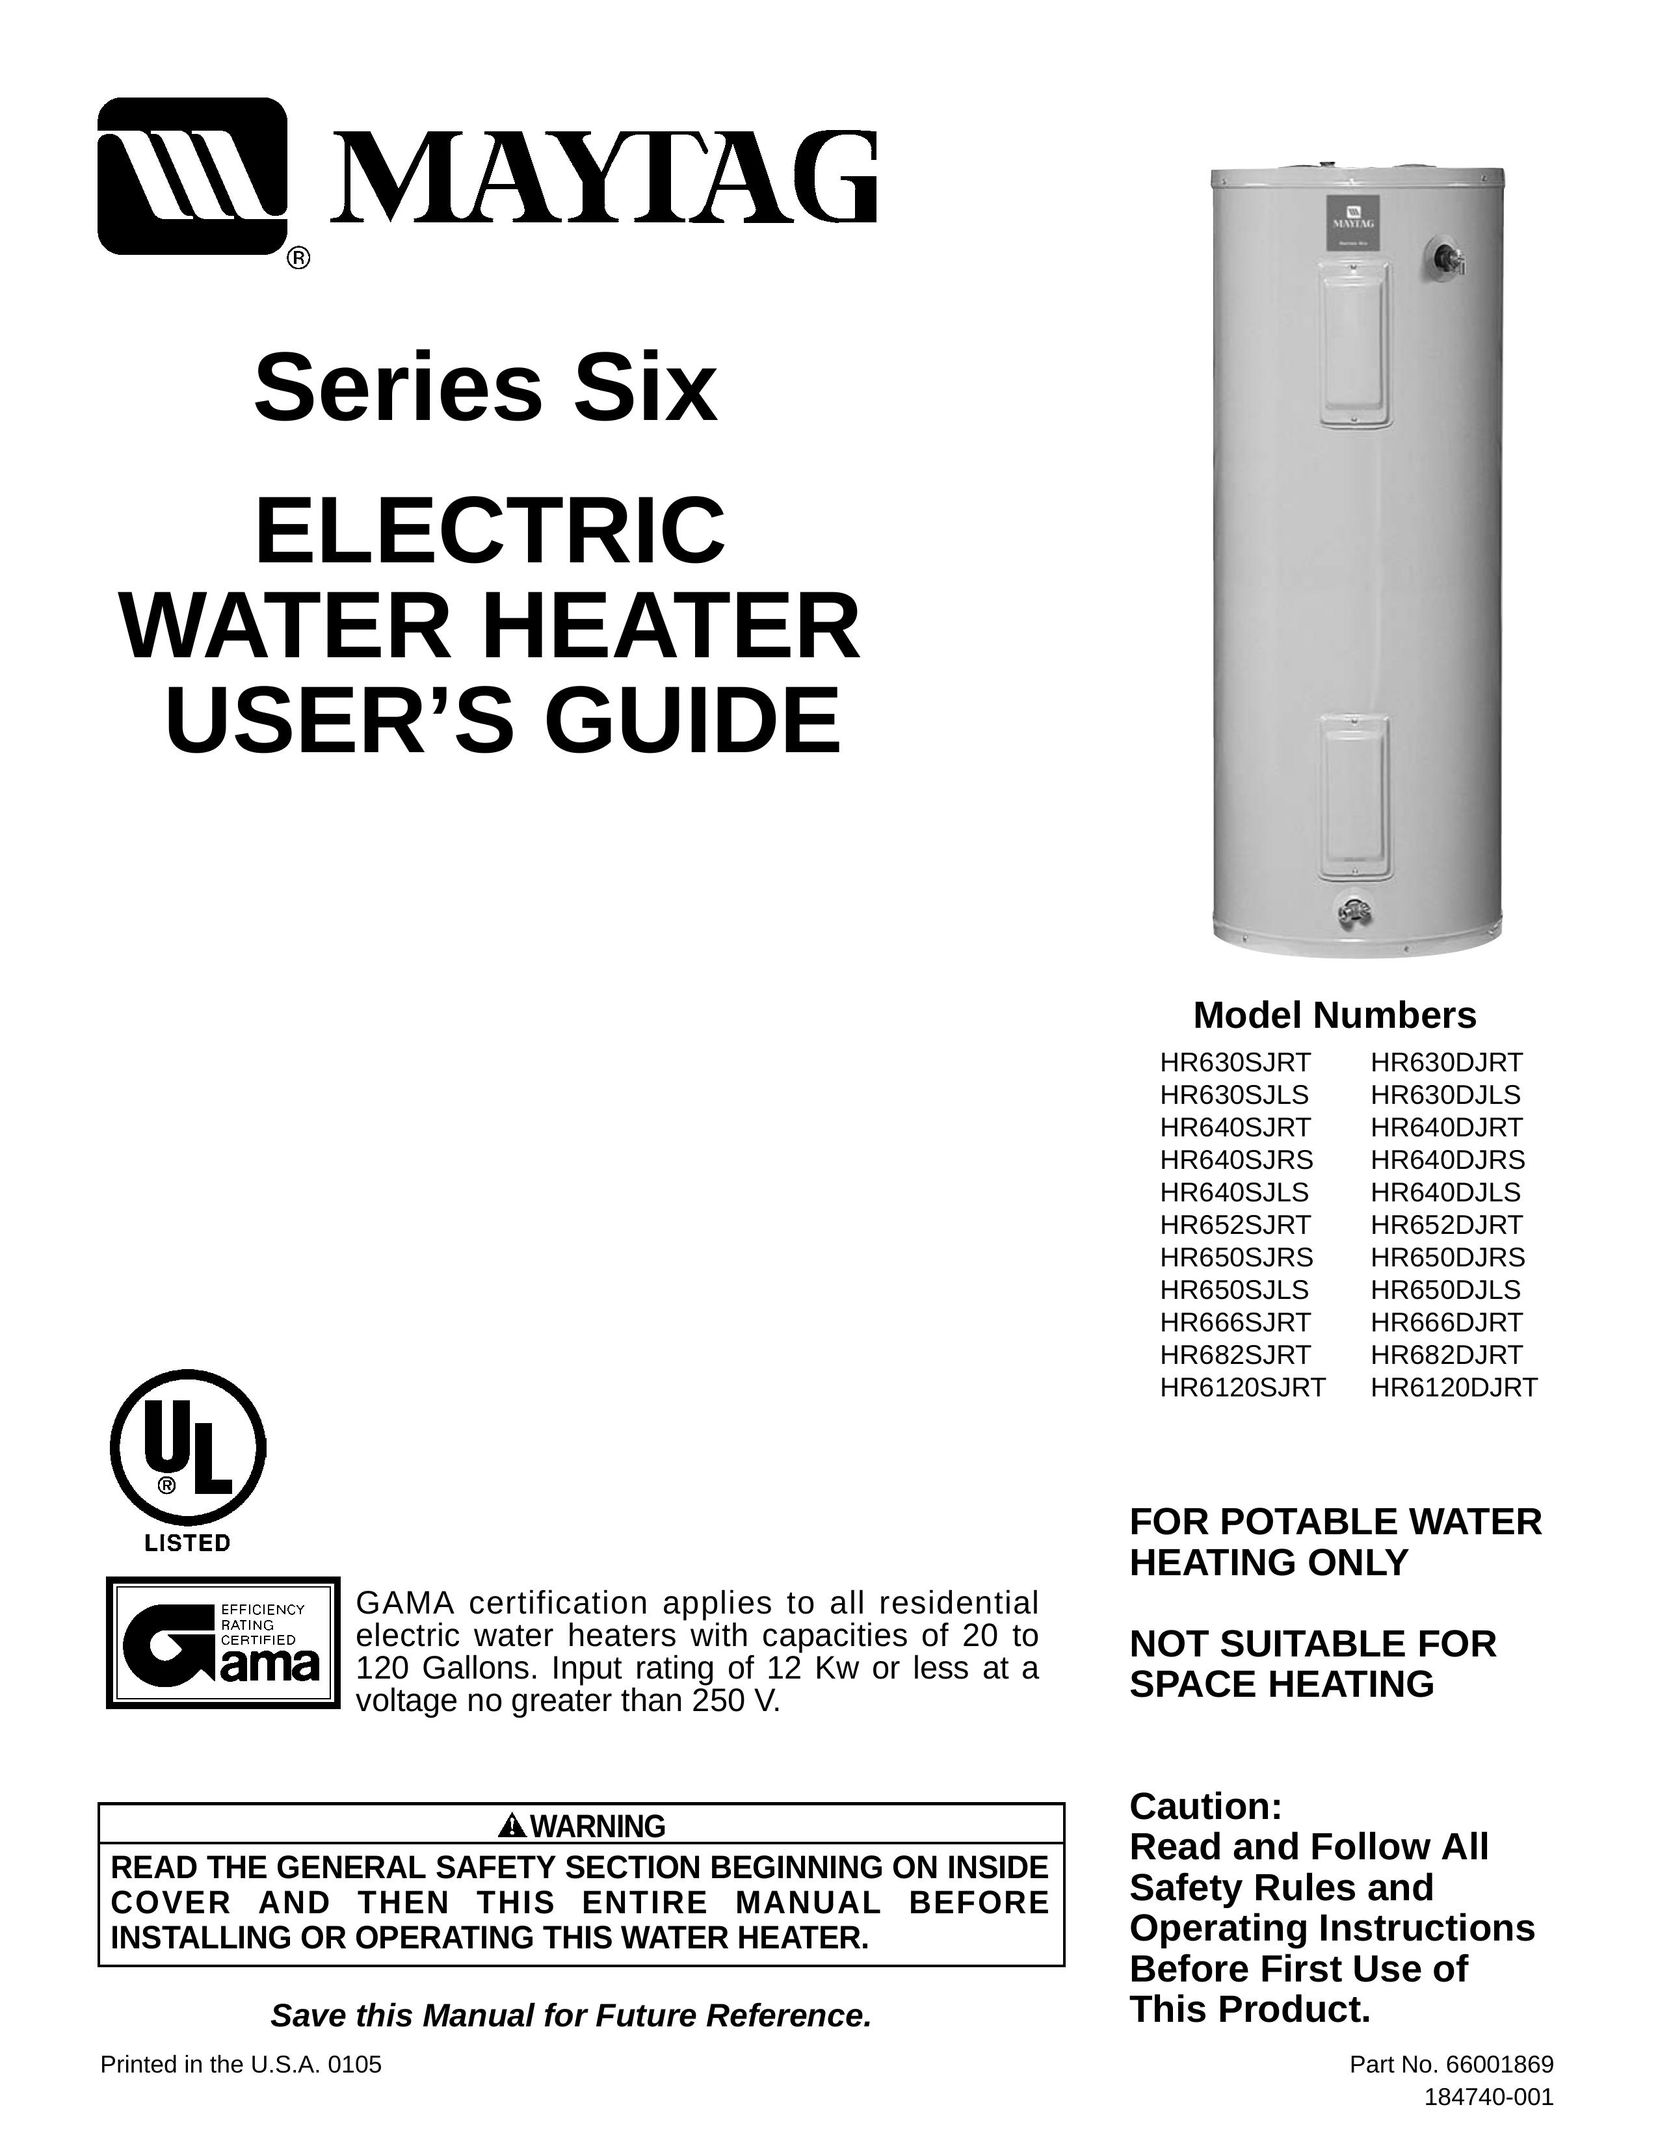 Maytag HR652SJRT Water Heater User Manual